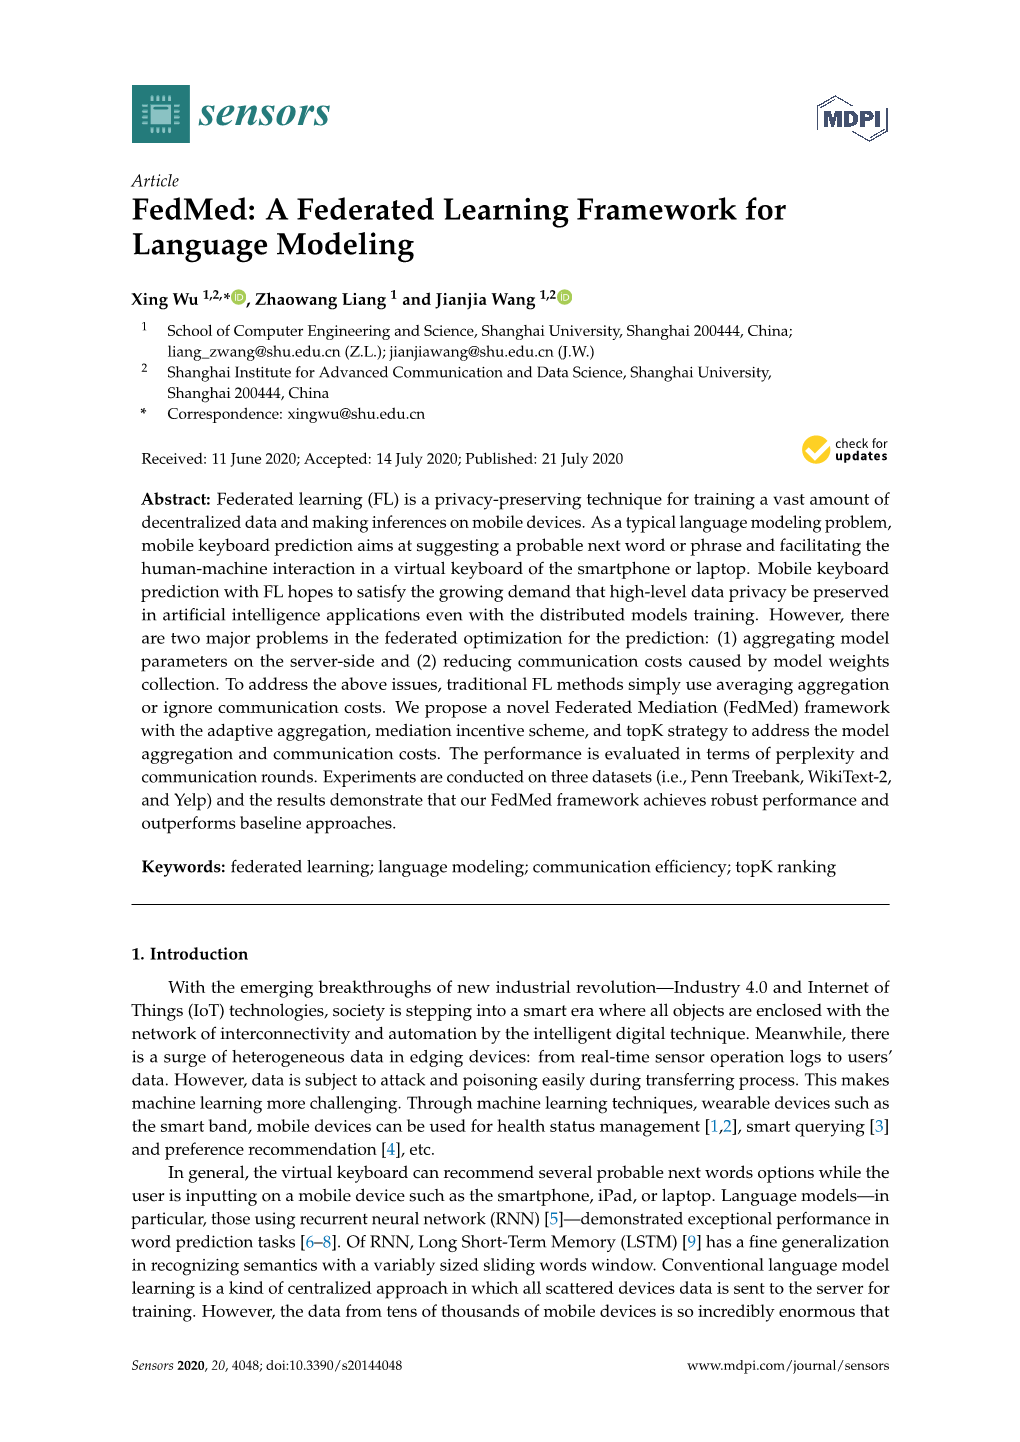 Fedmed: a Federated Learning Framework for Language Modeling